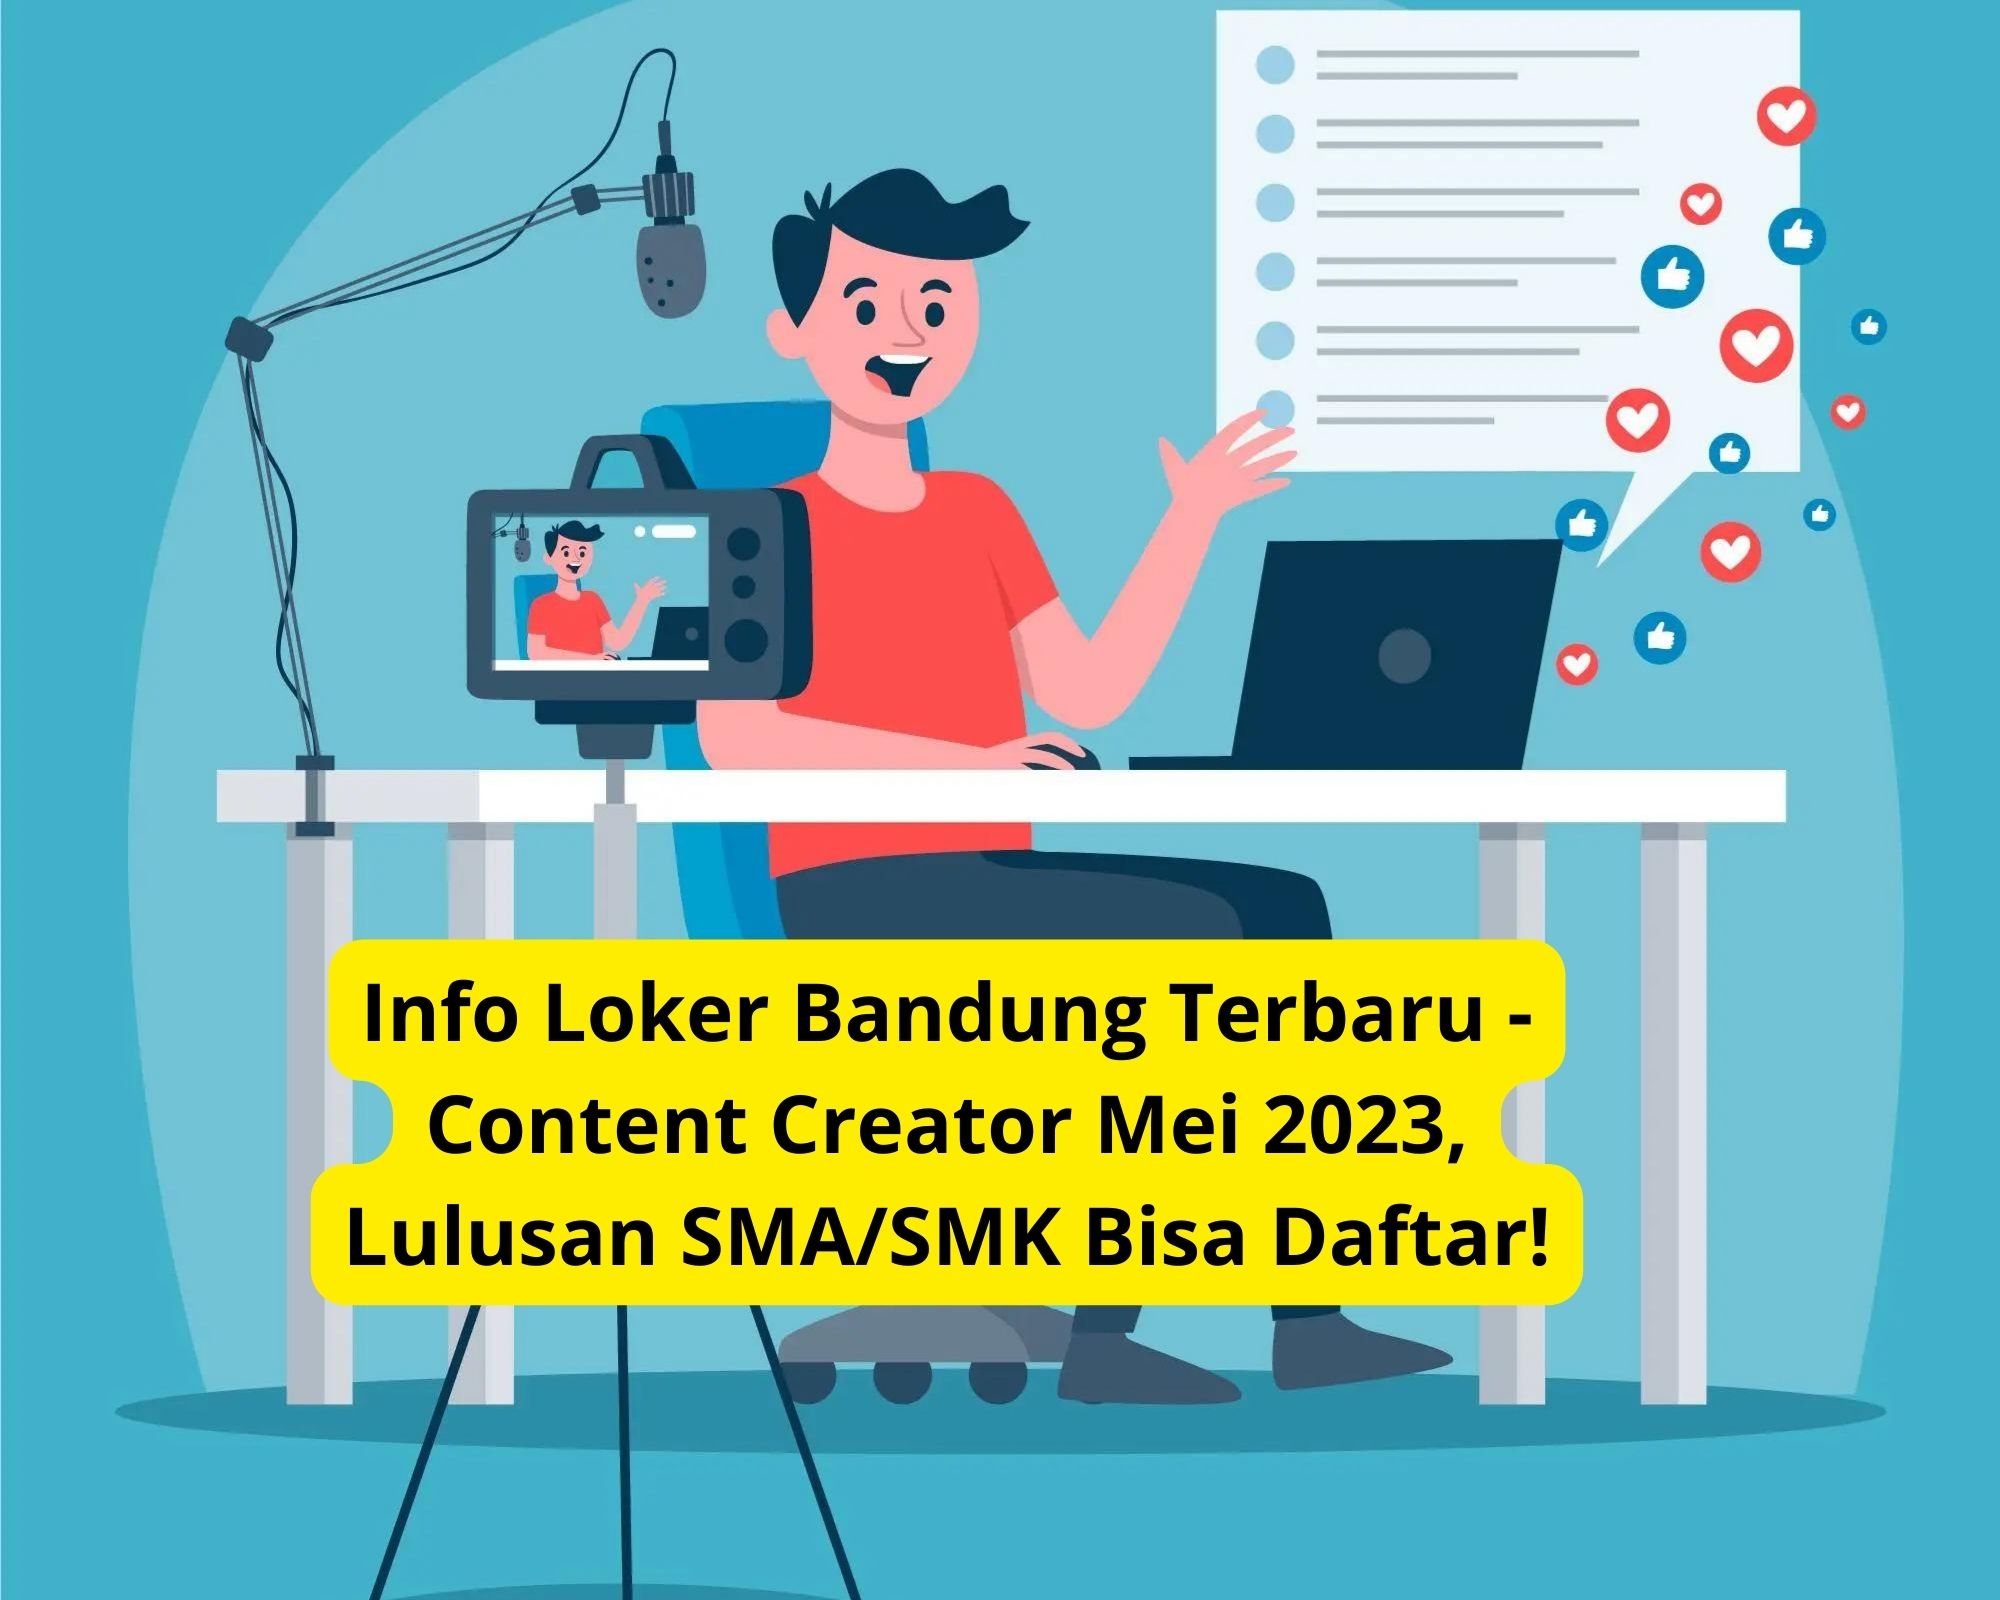 Info Loker Bandung Terbaru - Content Creator Mei 2023, Lulusan SMA/SMK Bisa Daftar!